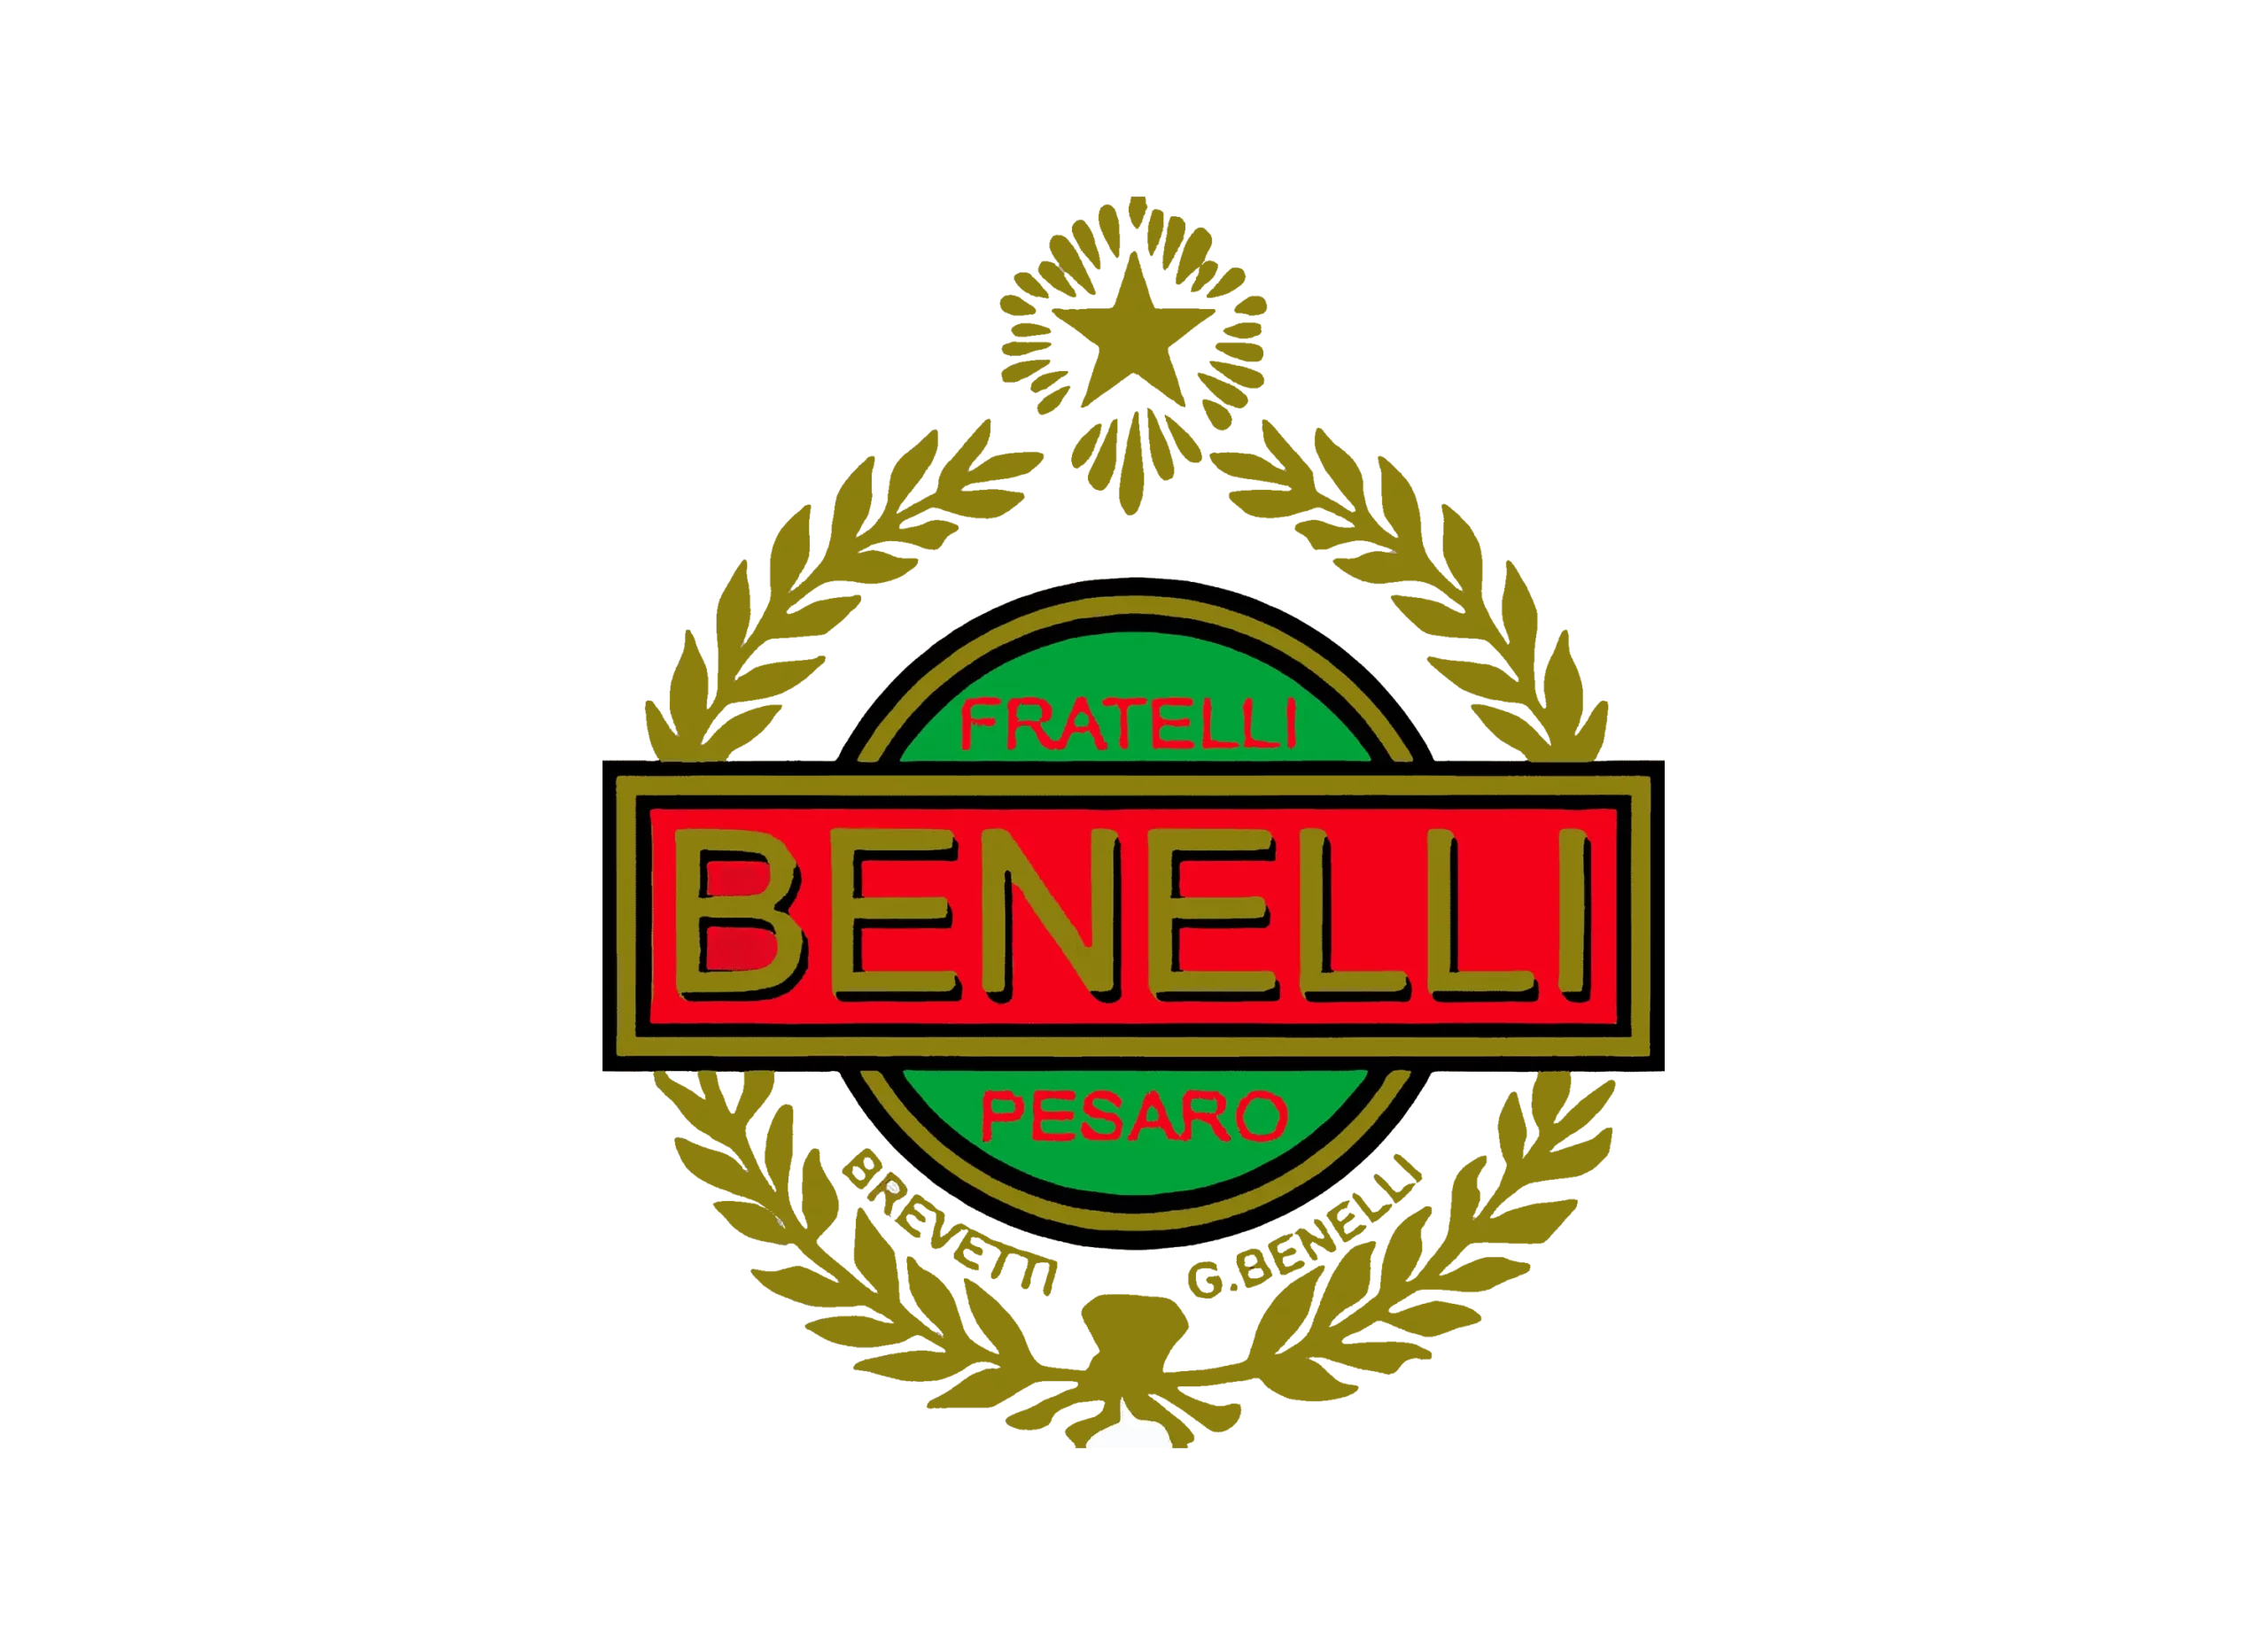 Benelli logo 1925-1932